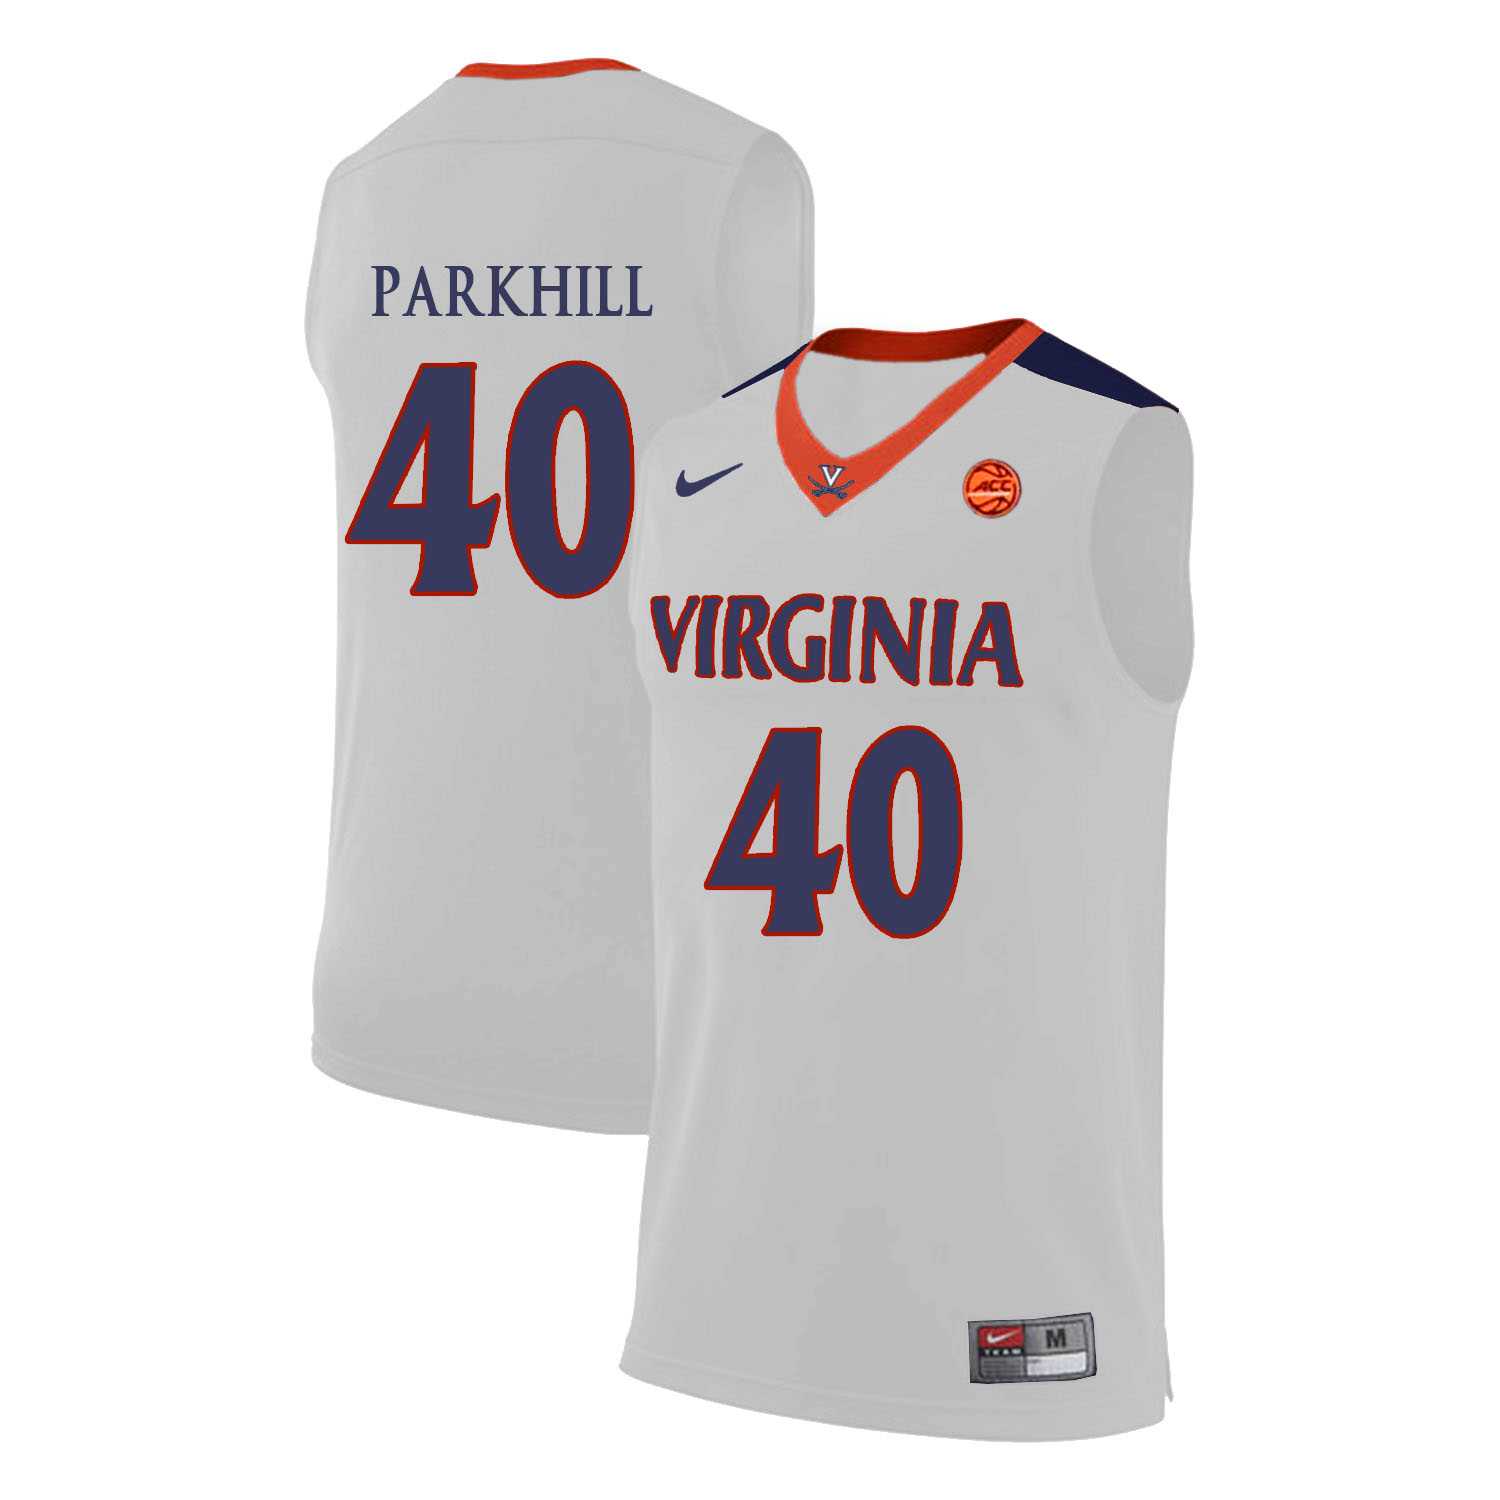 Virginia Cavaliers 40 Barry Parkhill White College Basketball Jersey Dzhi